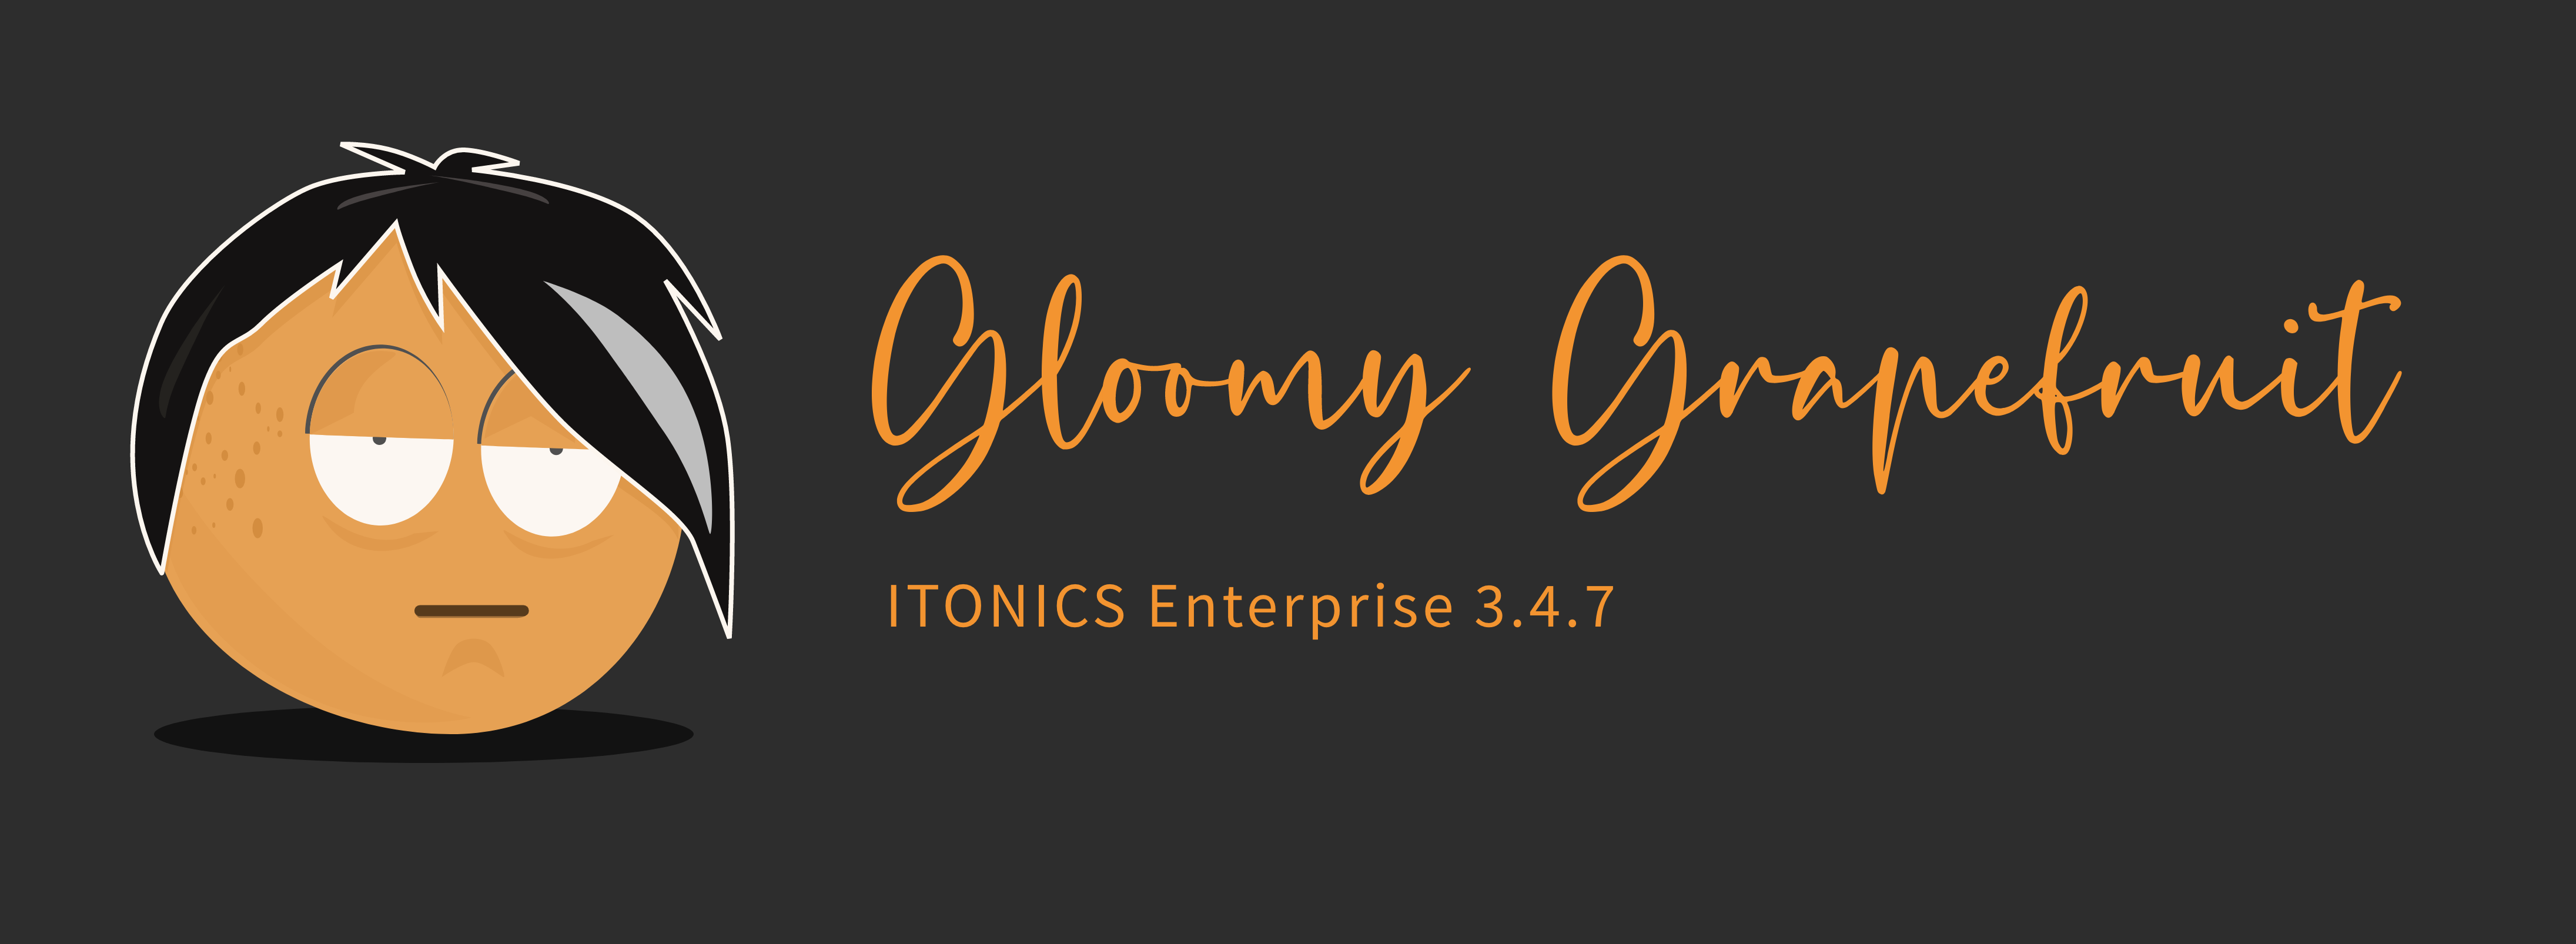 ITONICS_Enterprise_3.4.7.png